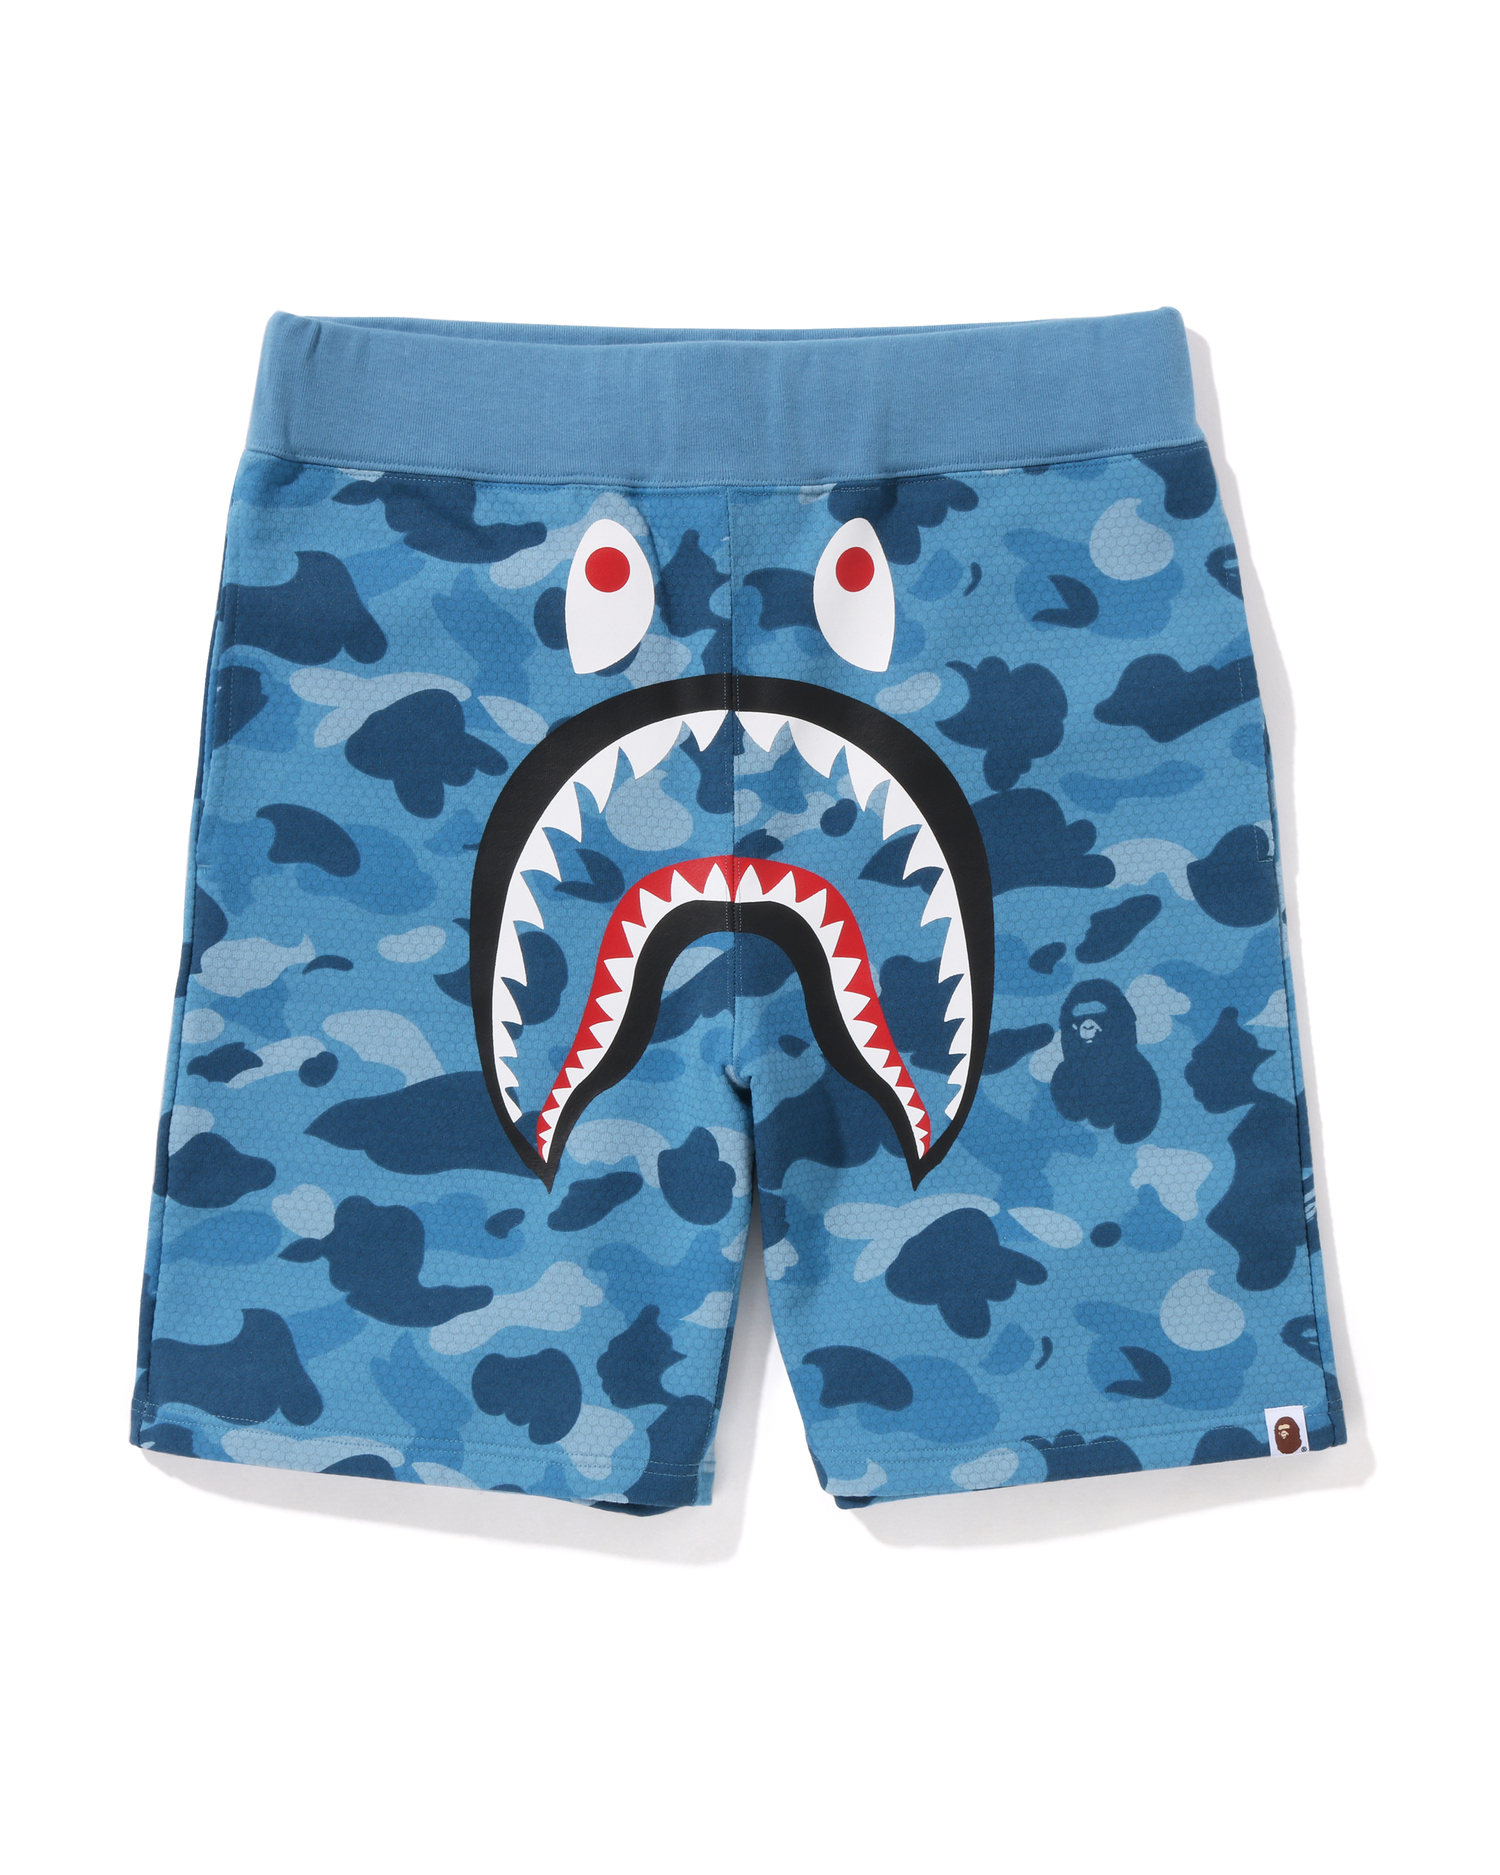 PADOLA Mens Shorts Bape Shorts 3D Print Camouflage Bape Tracksuit Bape  Shark Shorts Summer Bape Pants Beach Bermuda Bape Bottoms with Pockets  Multicolor  ShopStyle